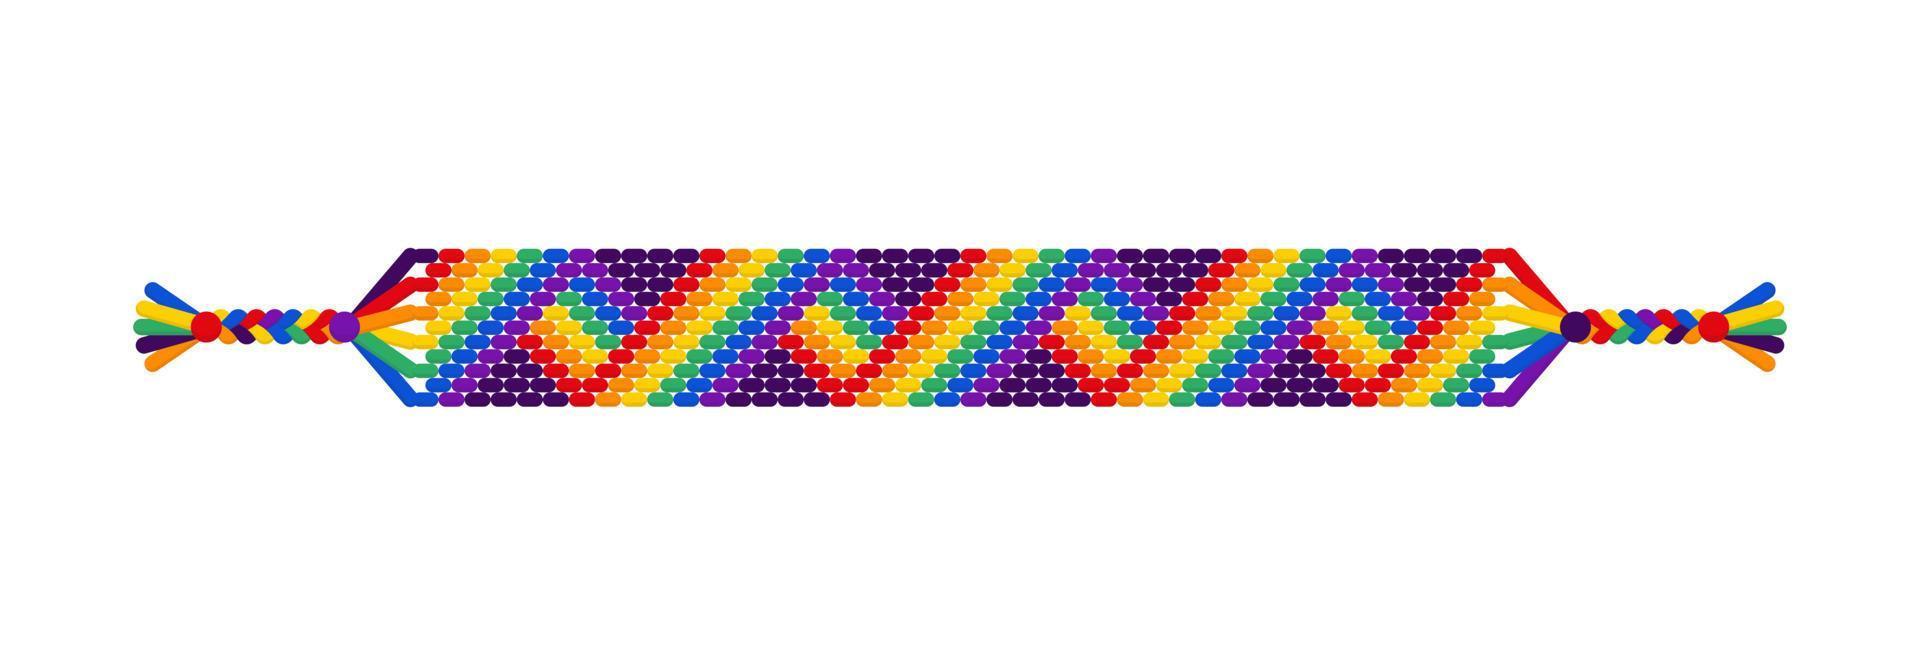 Vector rainbow lgbt handmade hippie friendship bracelet of threads.